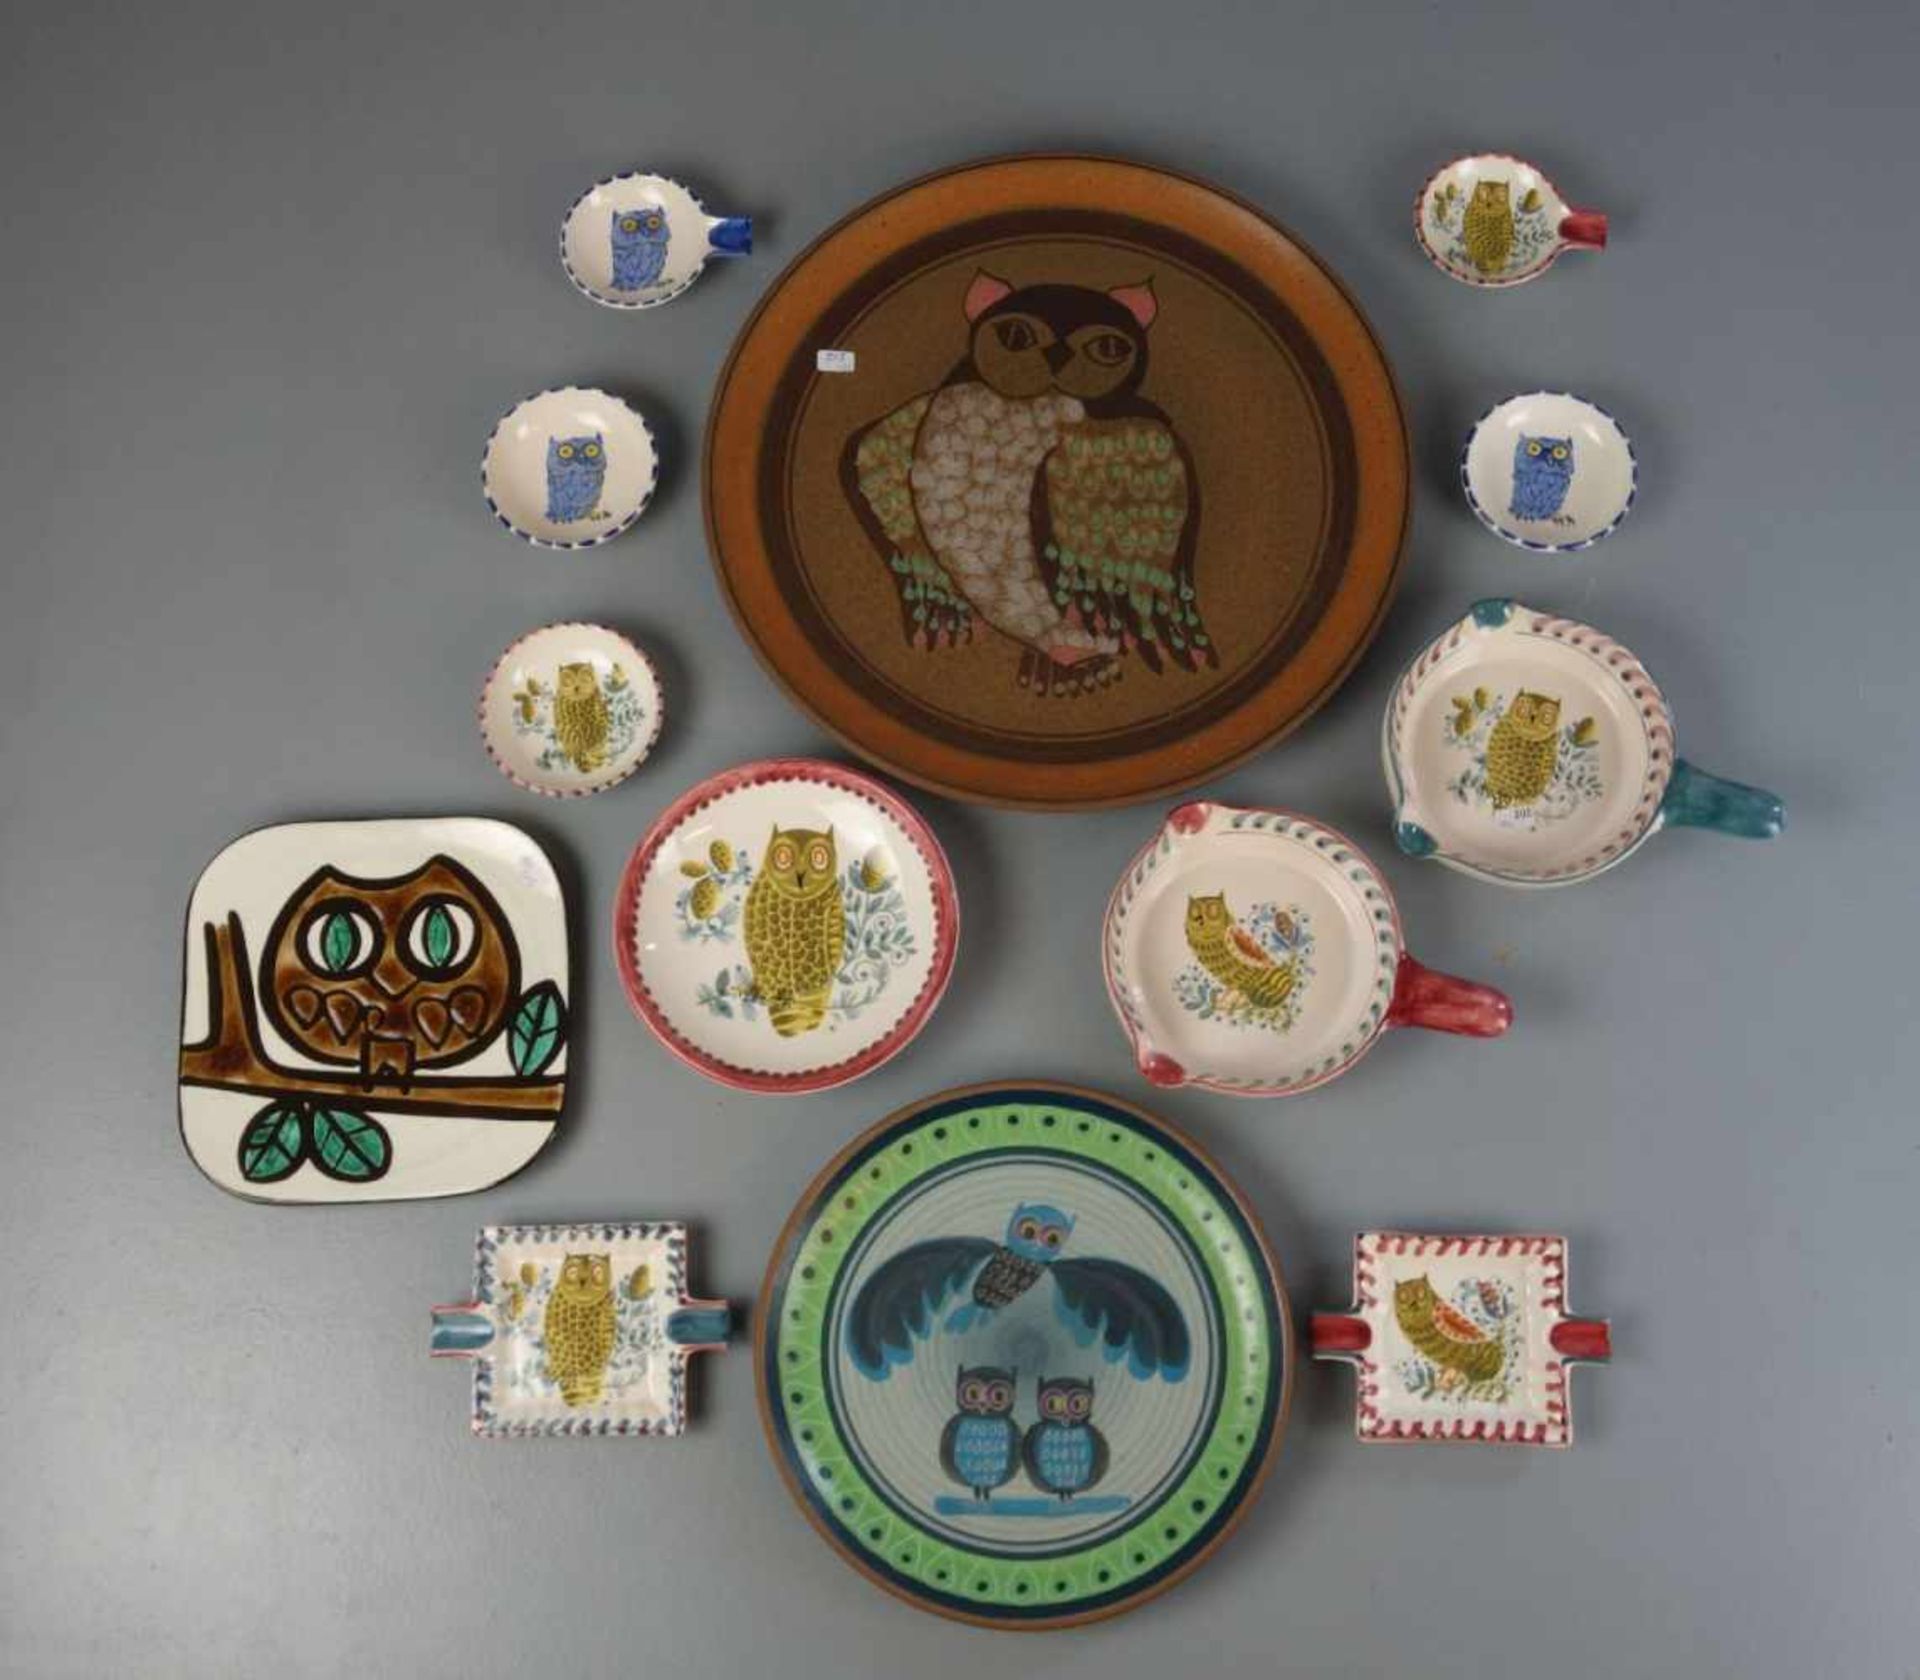 KONVOLUT KERAMIK / SAMMELTELLER MIT EULENDEKOR / ceramic plates, Keramik, farbig gefasst, - Image 2 of 3